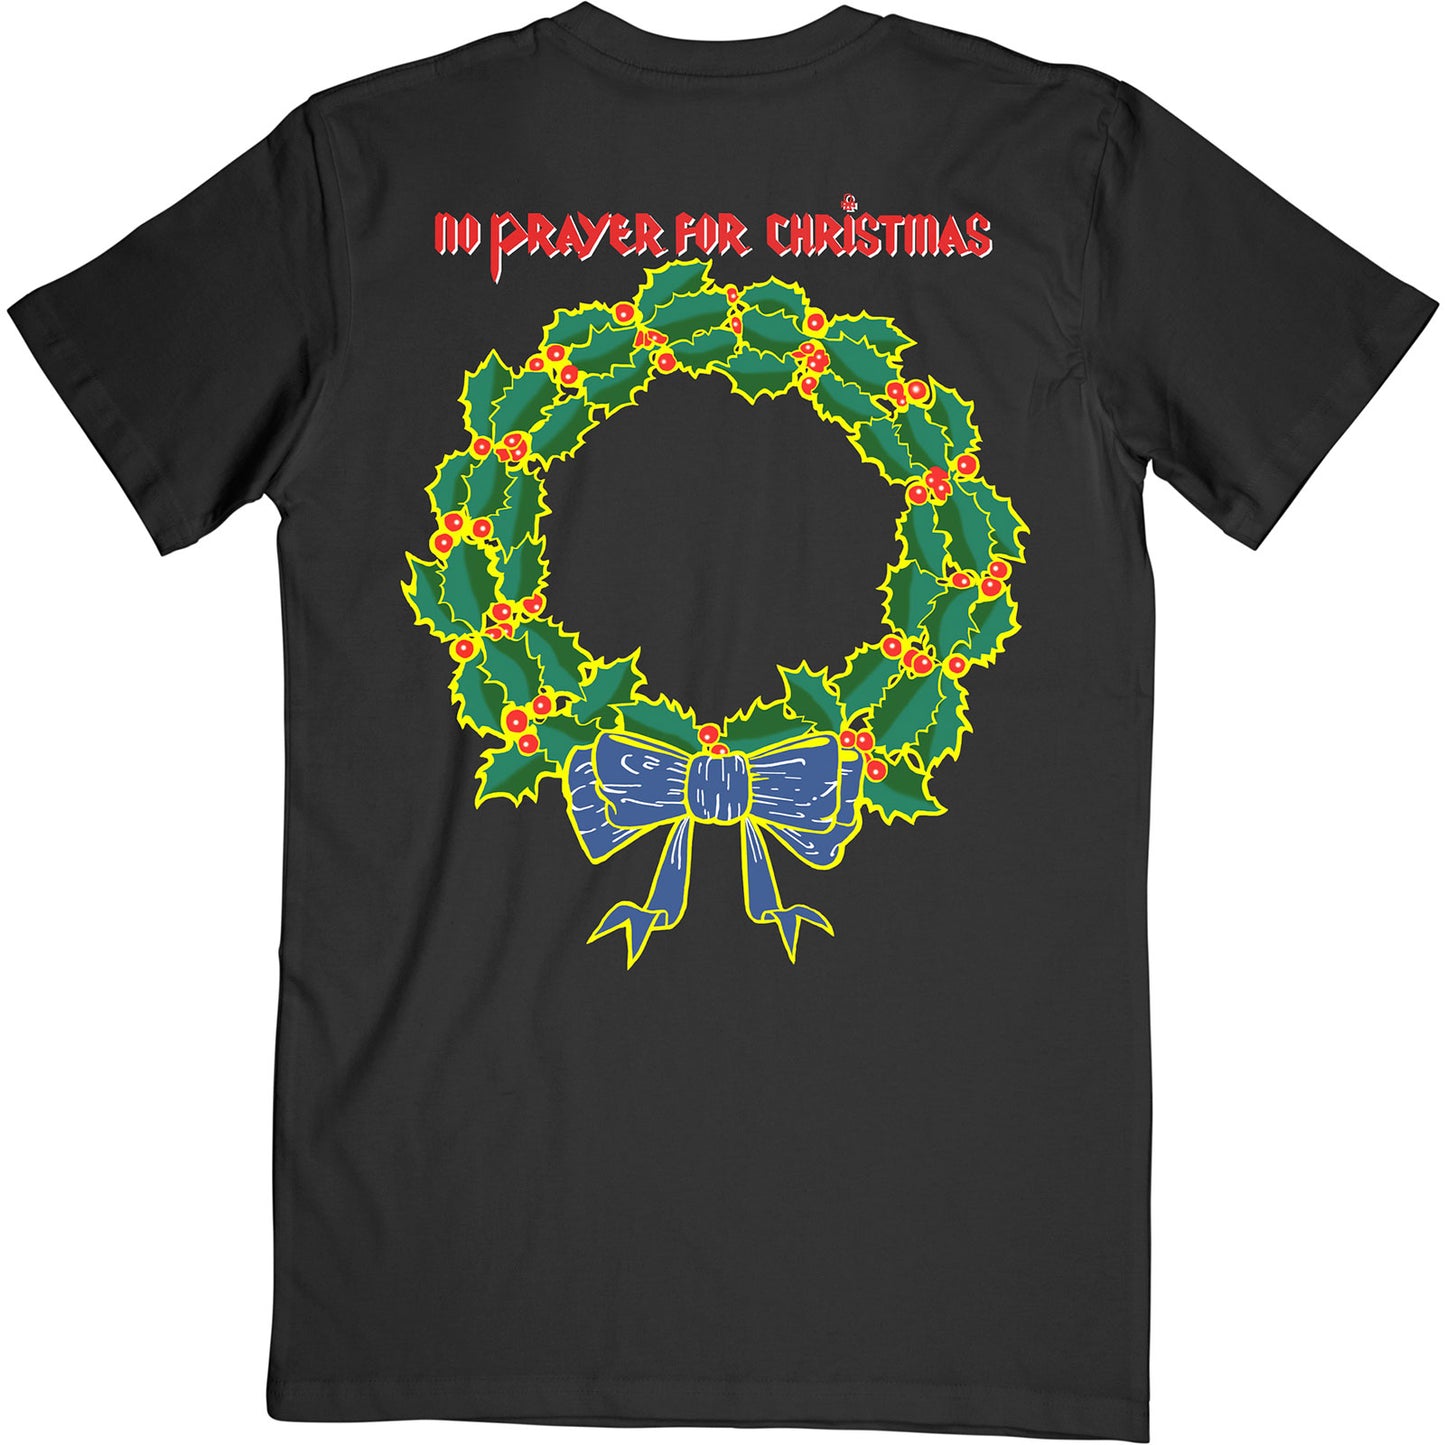 IRON MAIDEN - No Prayer For Christmas T-Shirt